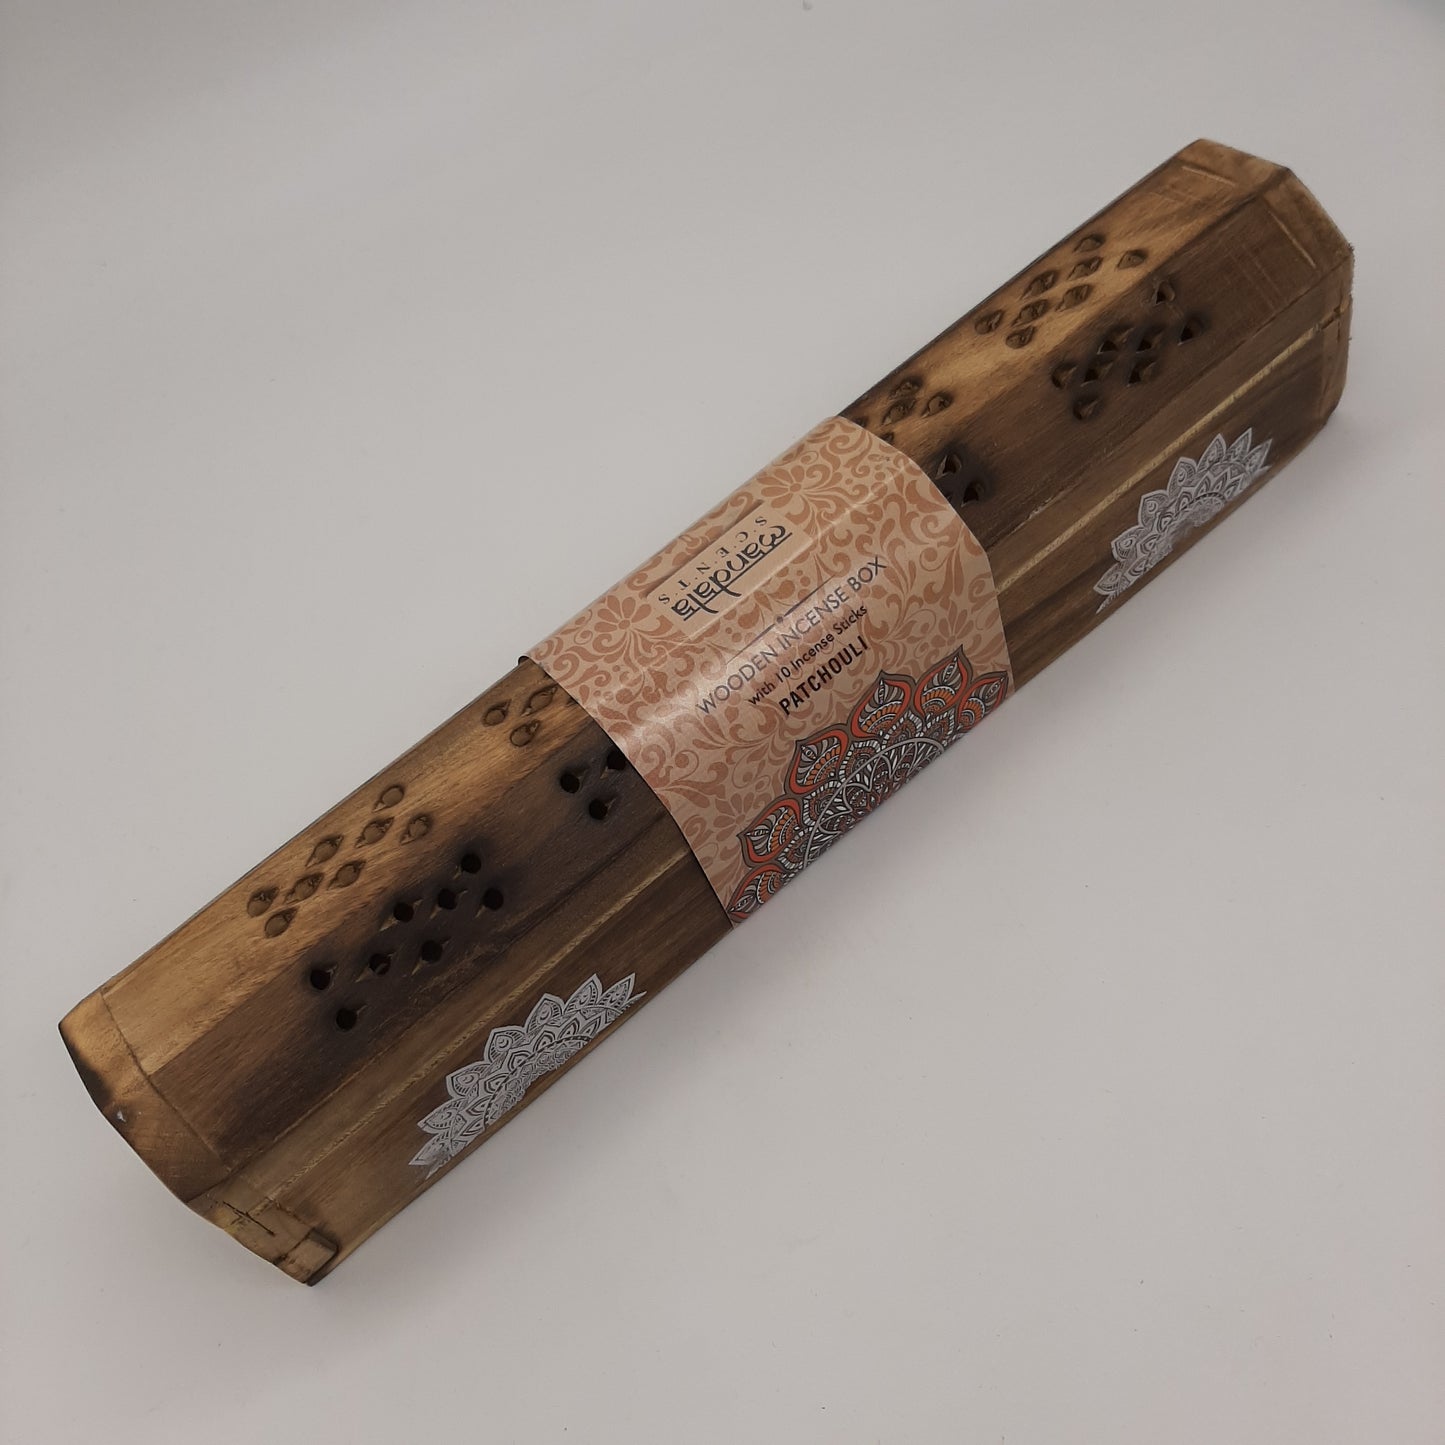 KARMA Incense Box with Incense Sticks